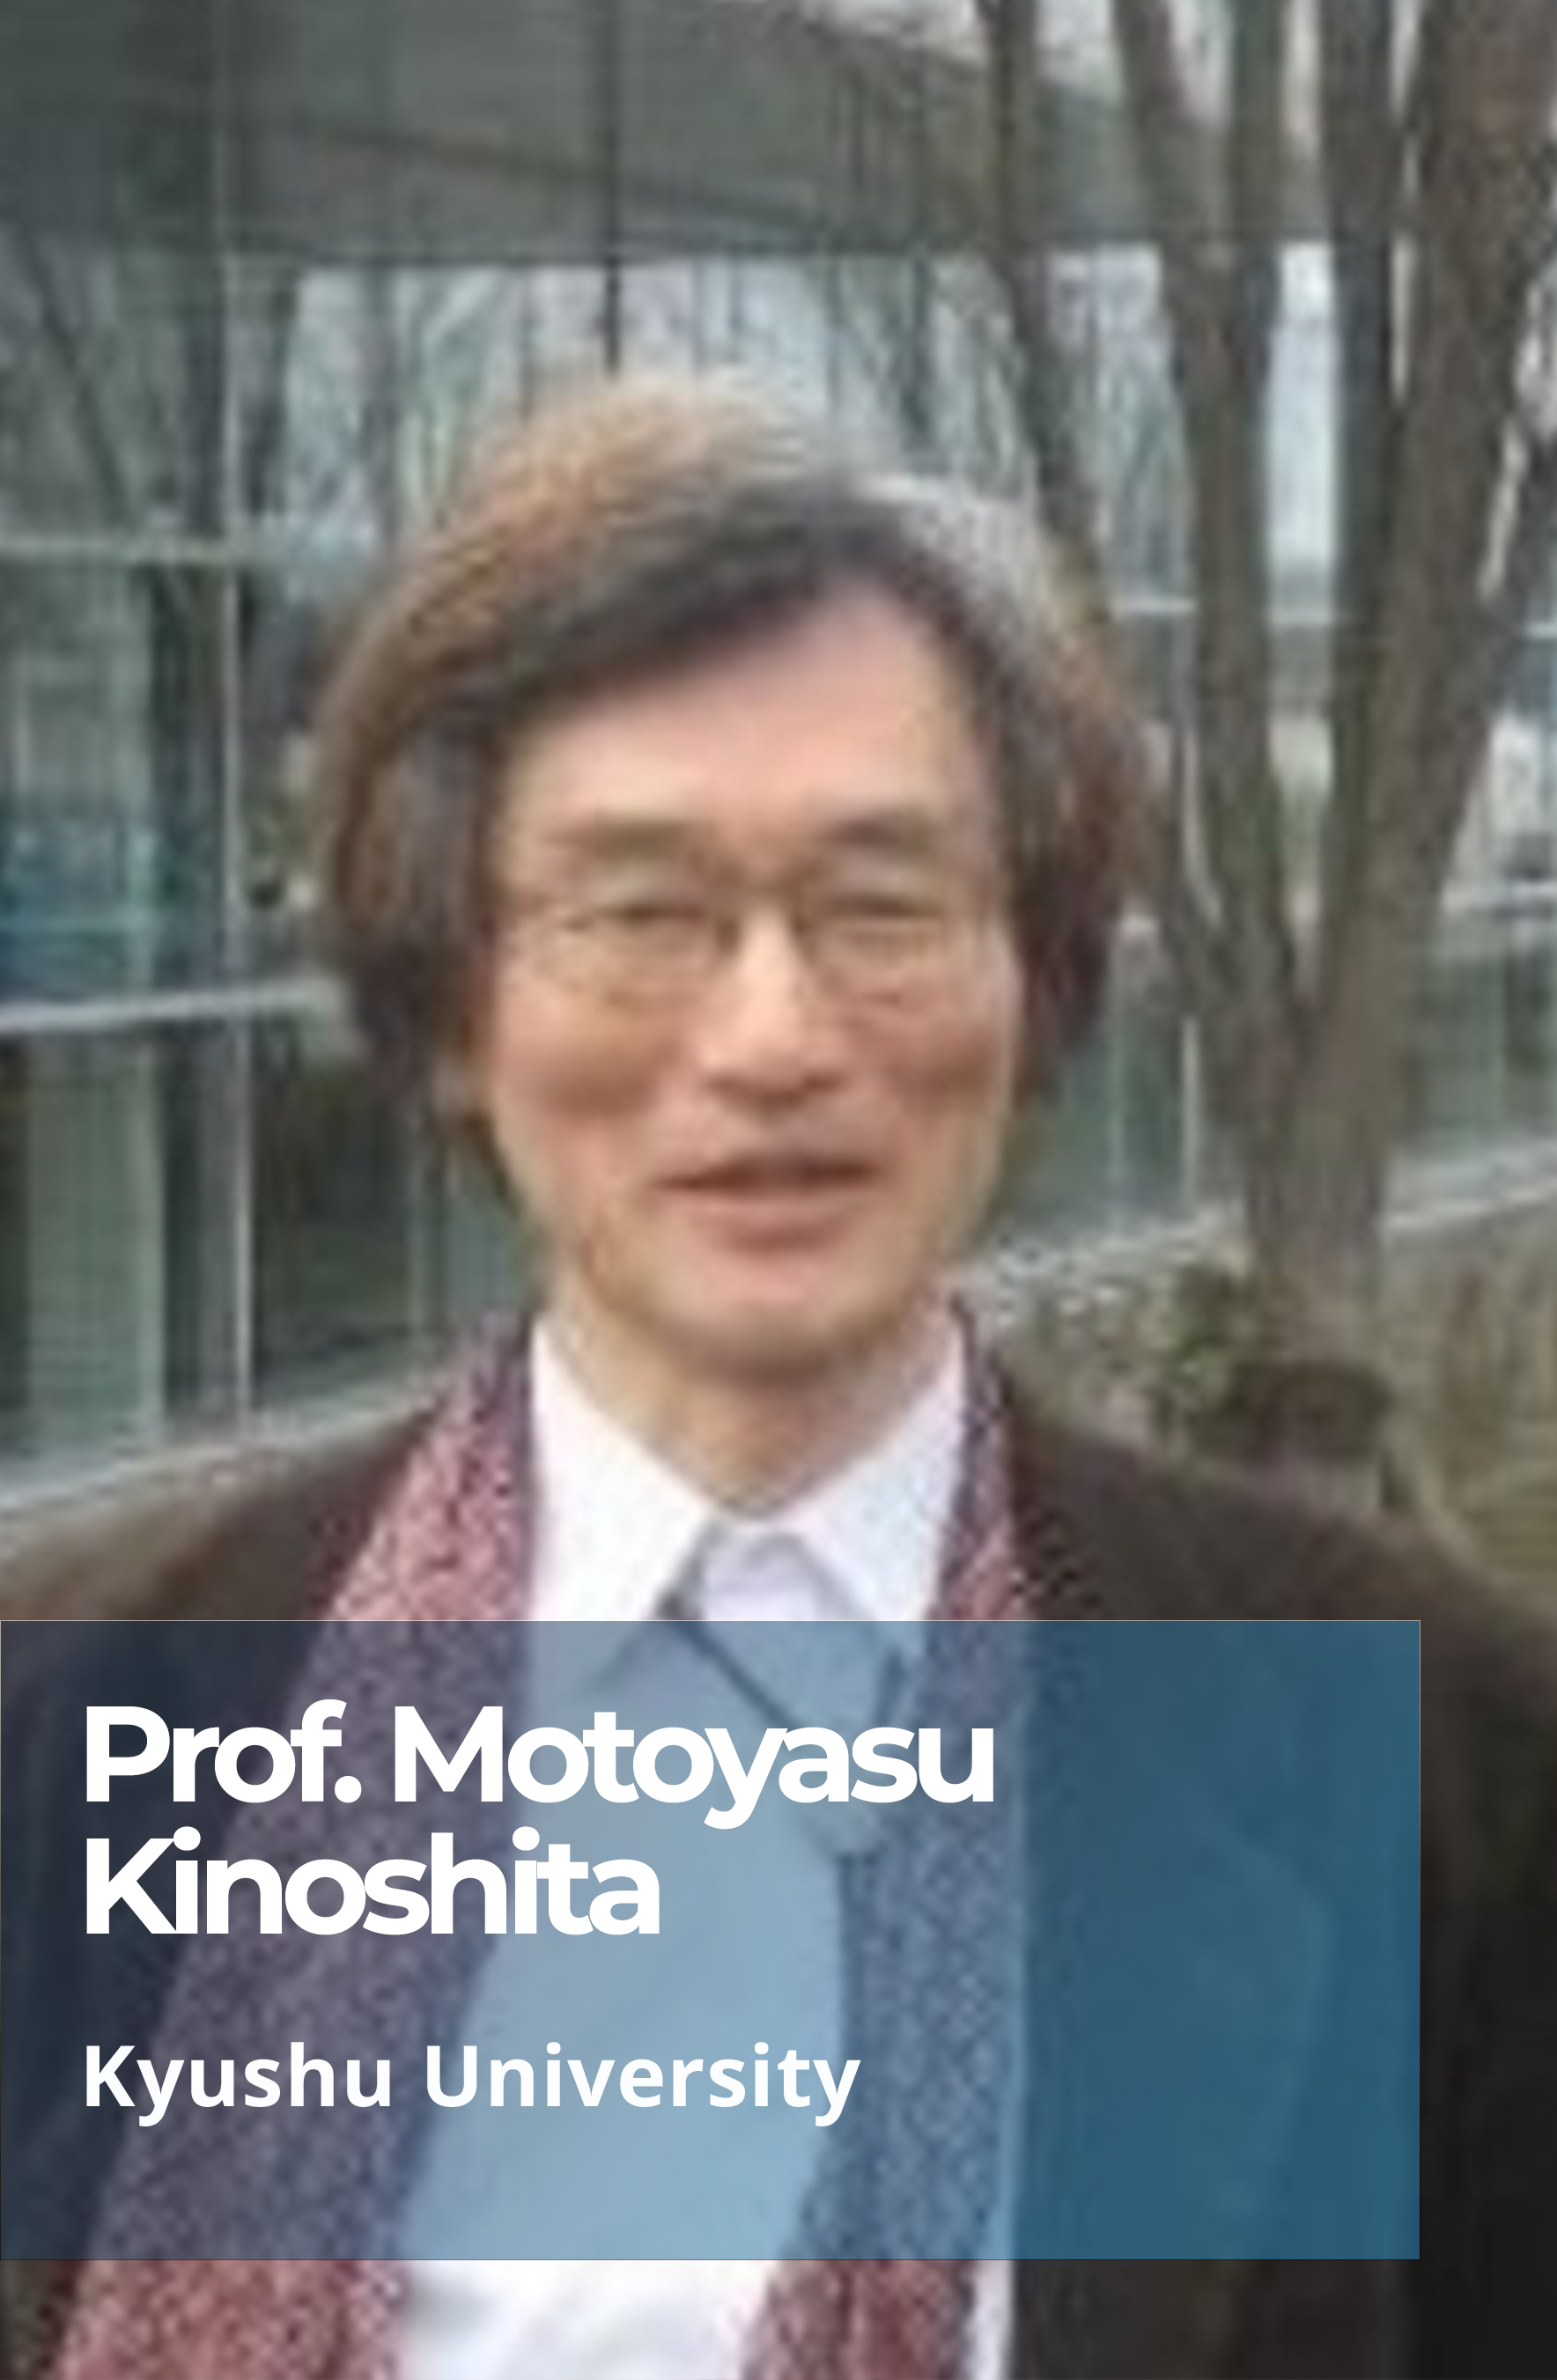 Prof. Motoyasu